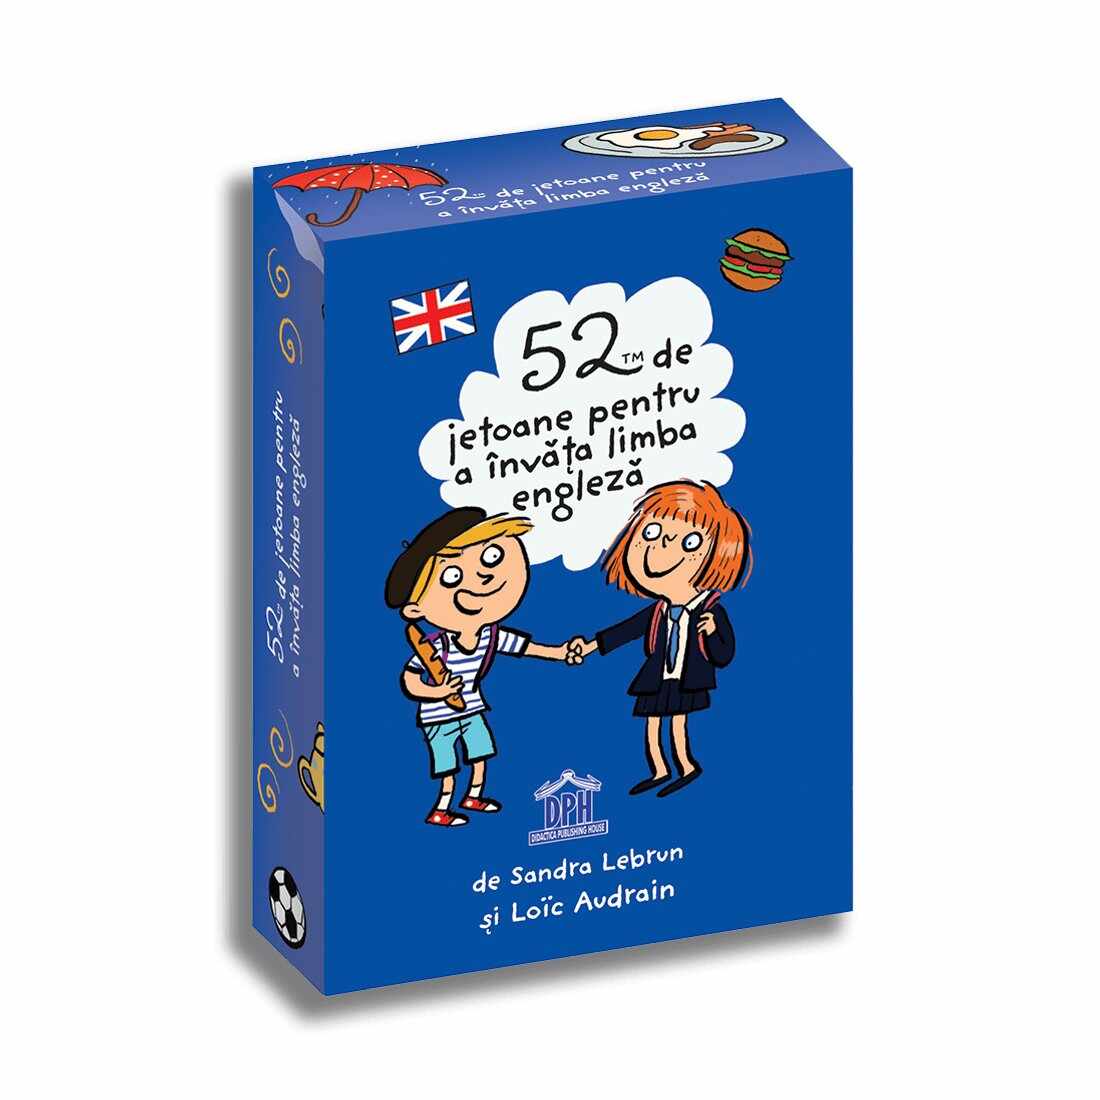 52 de jetoane pentru a invata limba engleza, Editura DPH